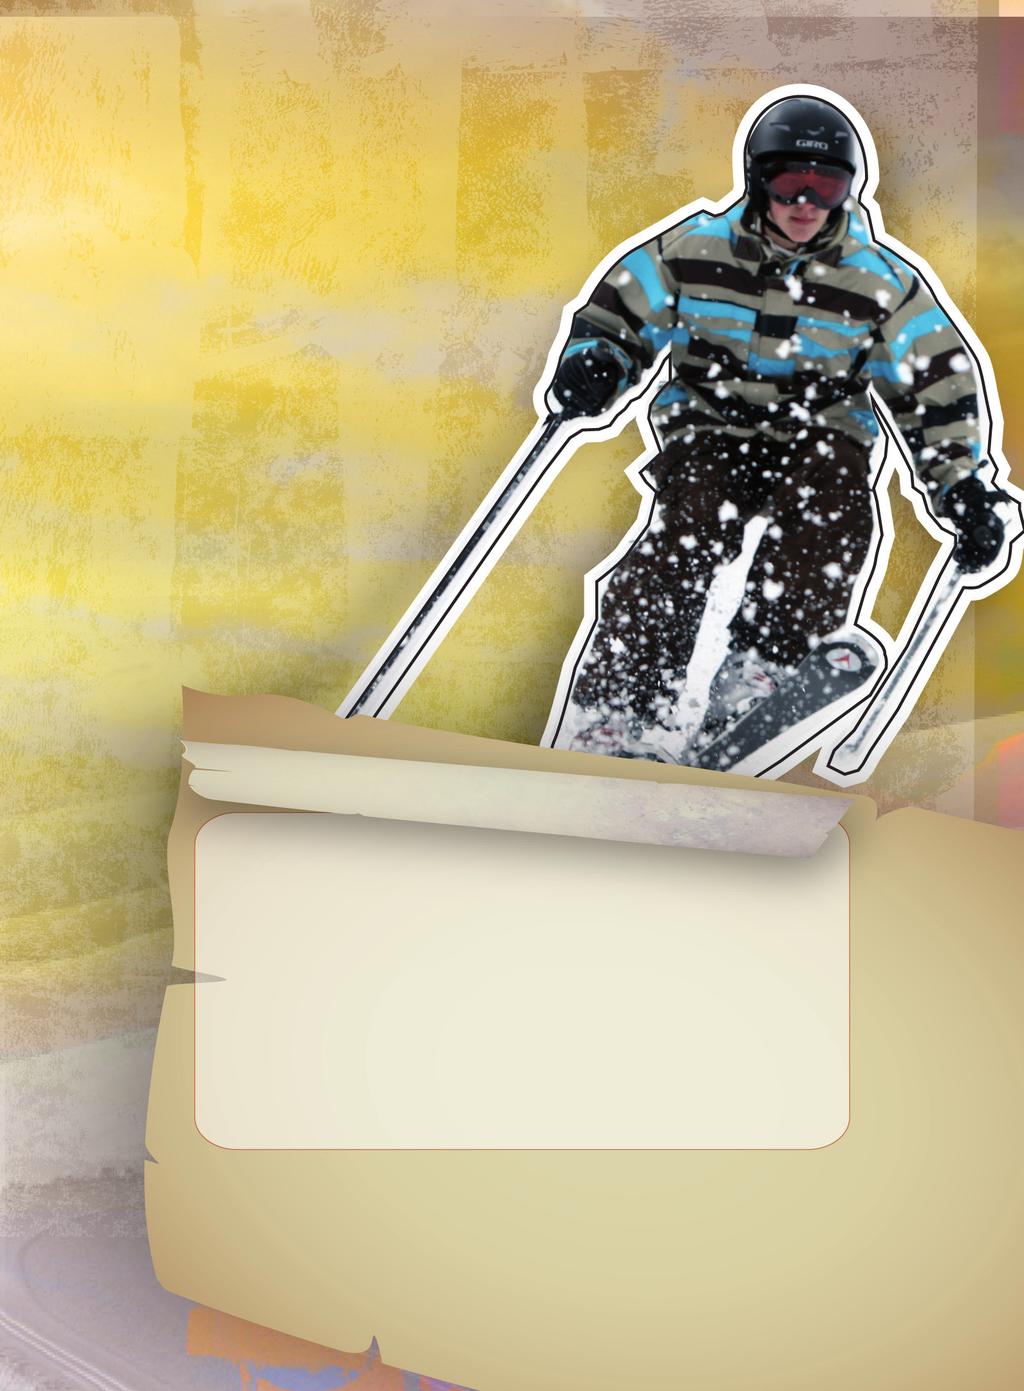 CANADIAN SKI INSTUCTORS' ALLIANCE 12 Canadian Ski